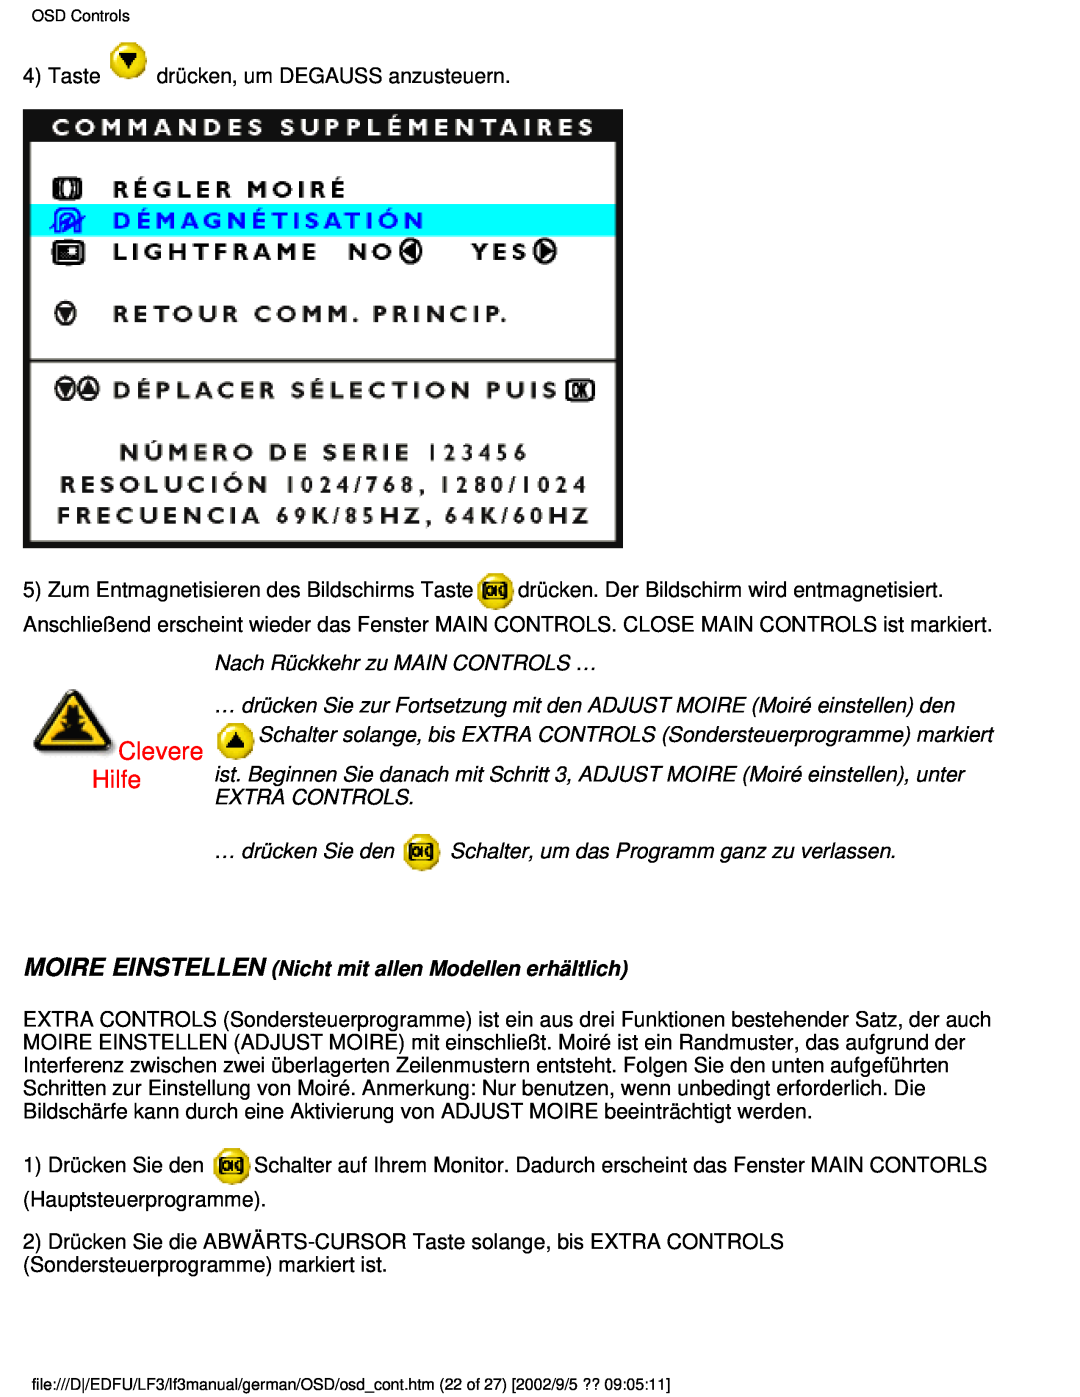 Philips 107E user manual Clevere Hilfe, Nach Rückkehr zu MAIN CONTROLS …, Extra Controls 